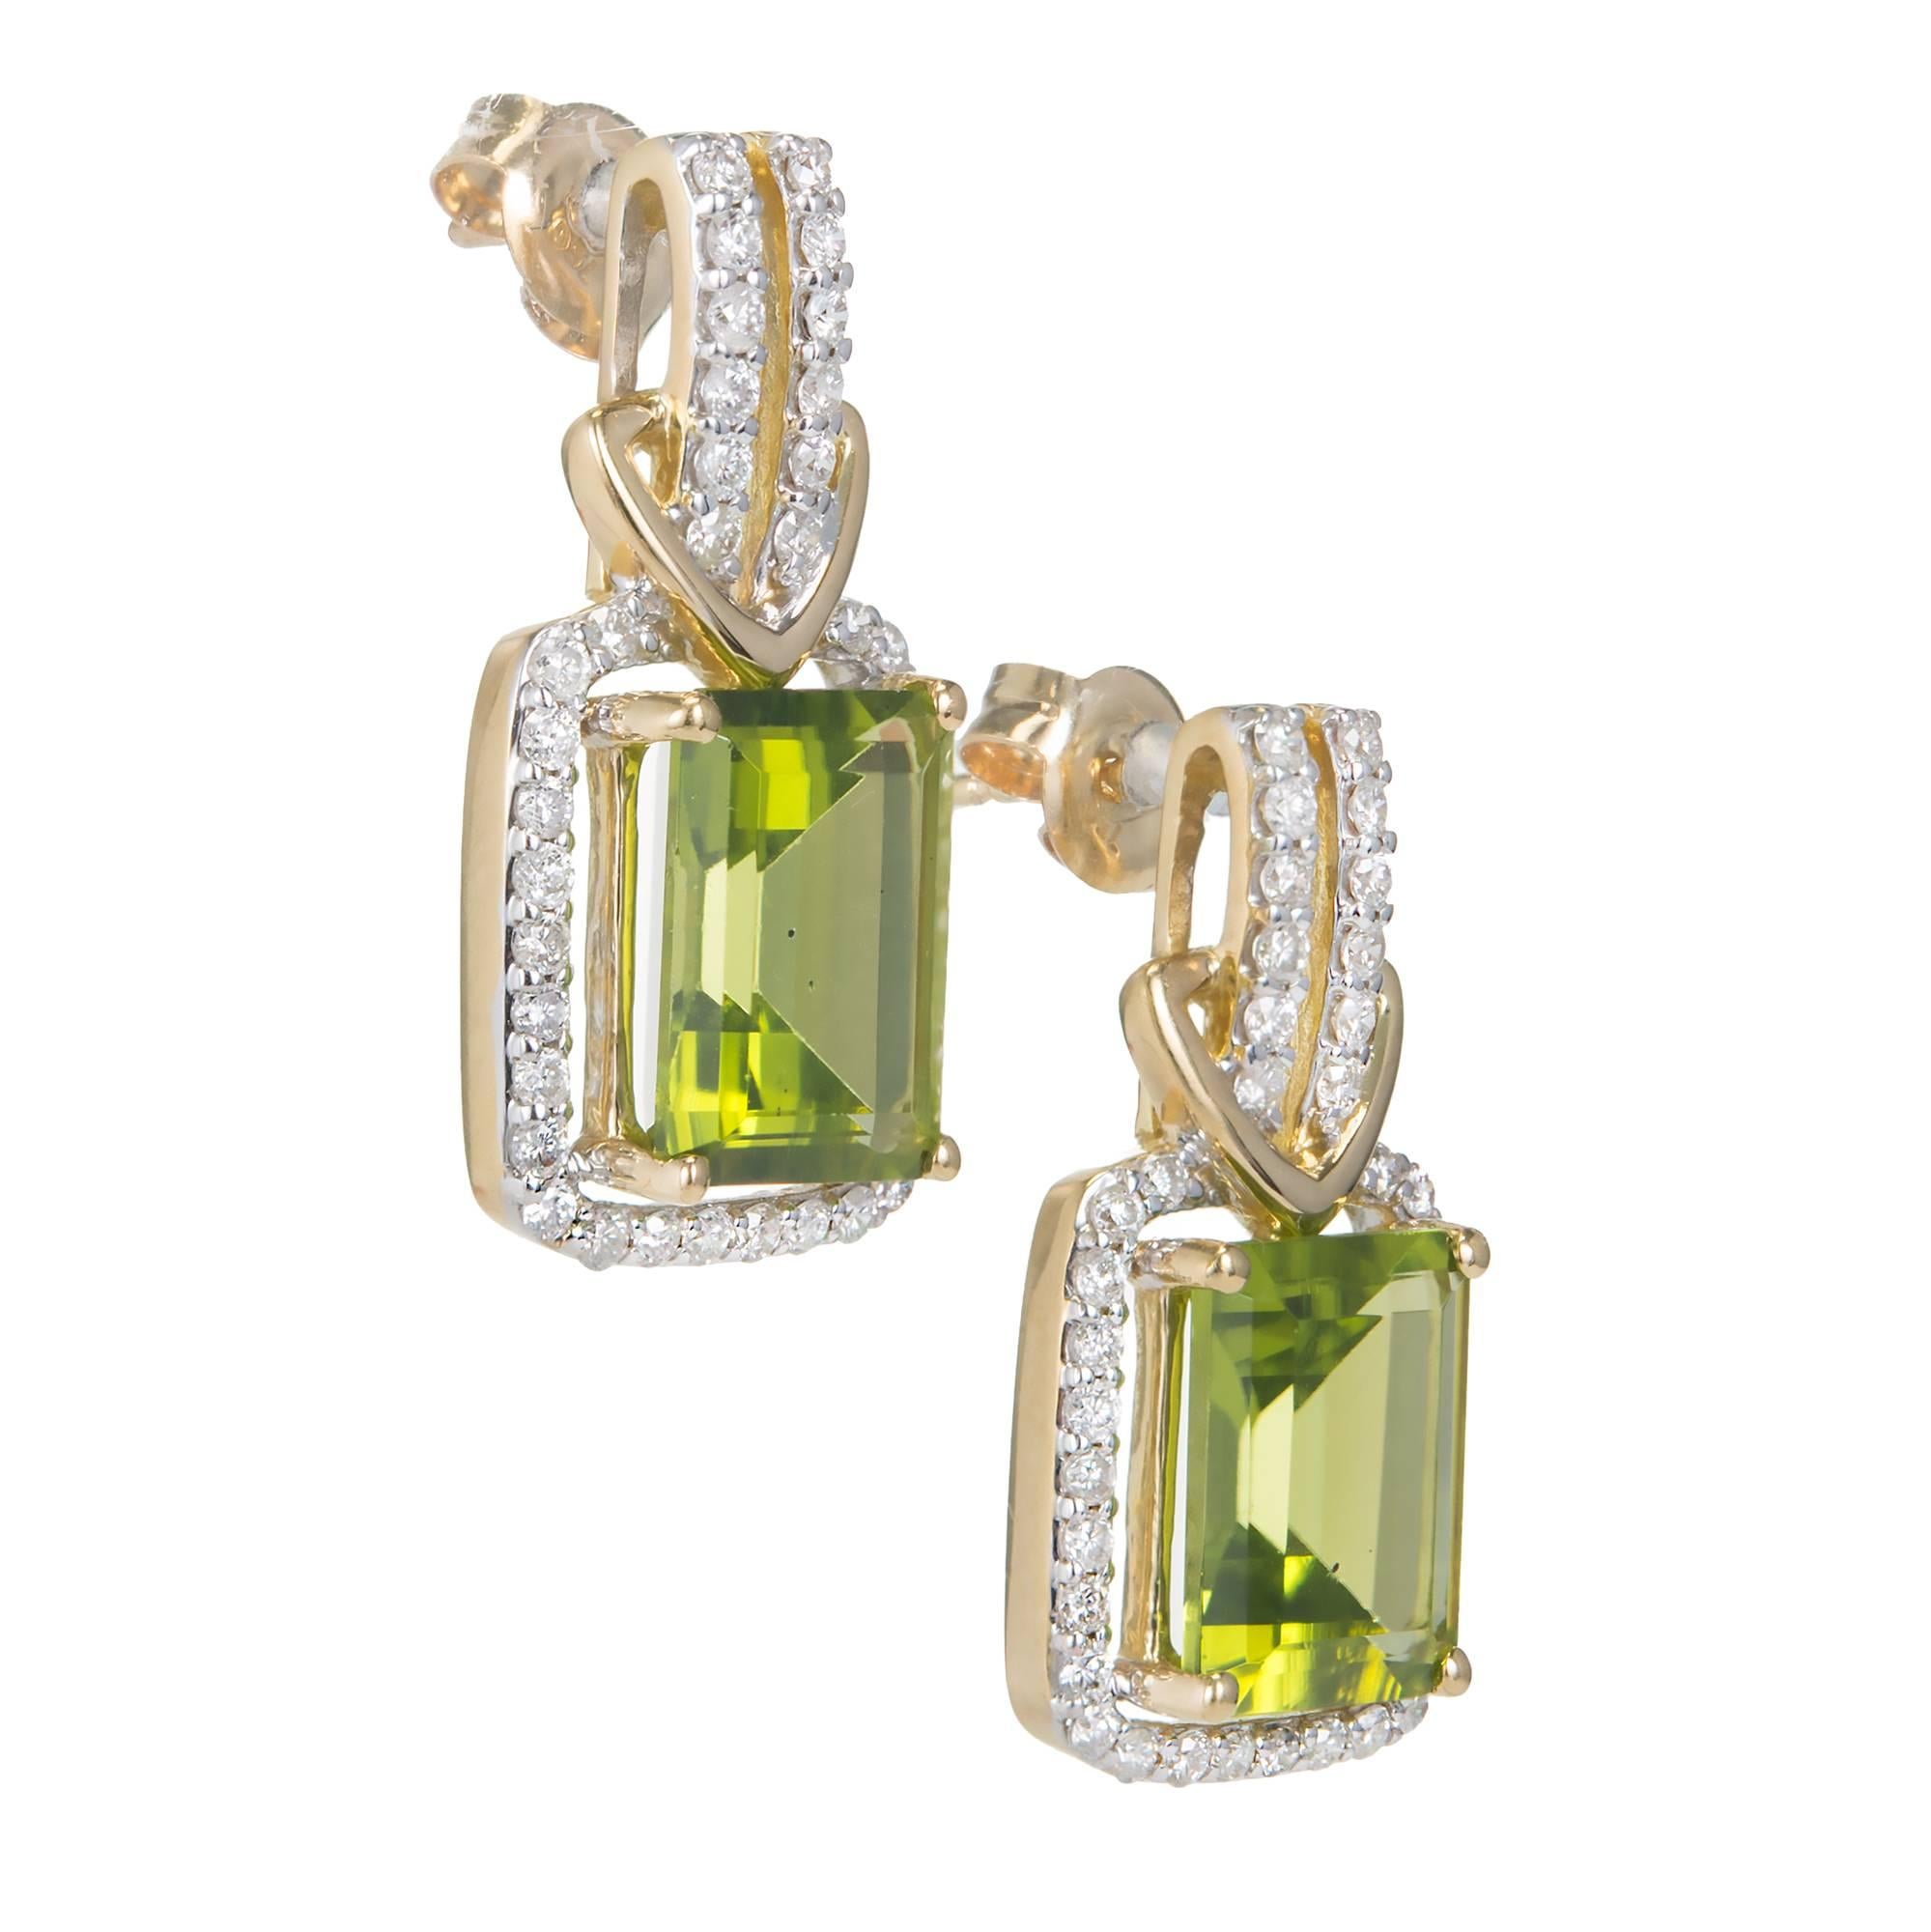 Emerald cut Peridot diamond halo 18k yellow gold earrings.

76 round diamonds, approx. total weight .75cts, G – H, VS
2 Emerald cut green Peridot, approx. total weight 7.50cts, VS, 10 x 8mm
18k yellow gold
Tested: 18k
Stamped: 750
Hallmark: GBC
7.0